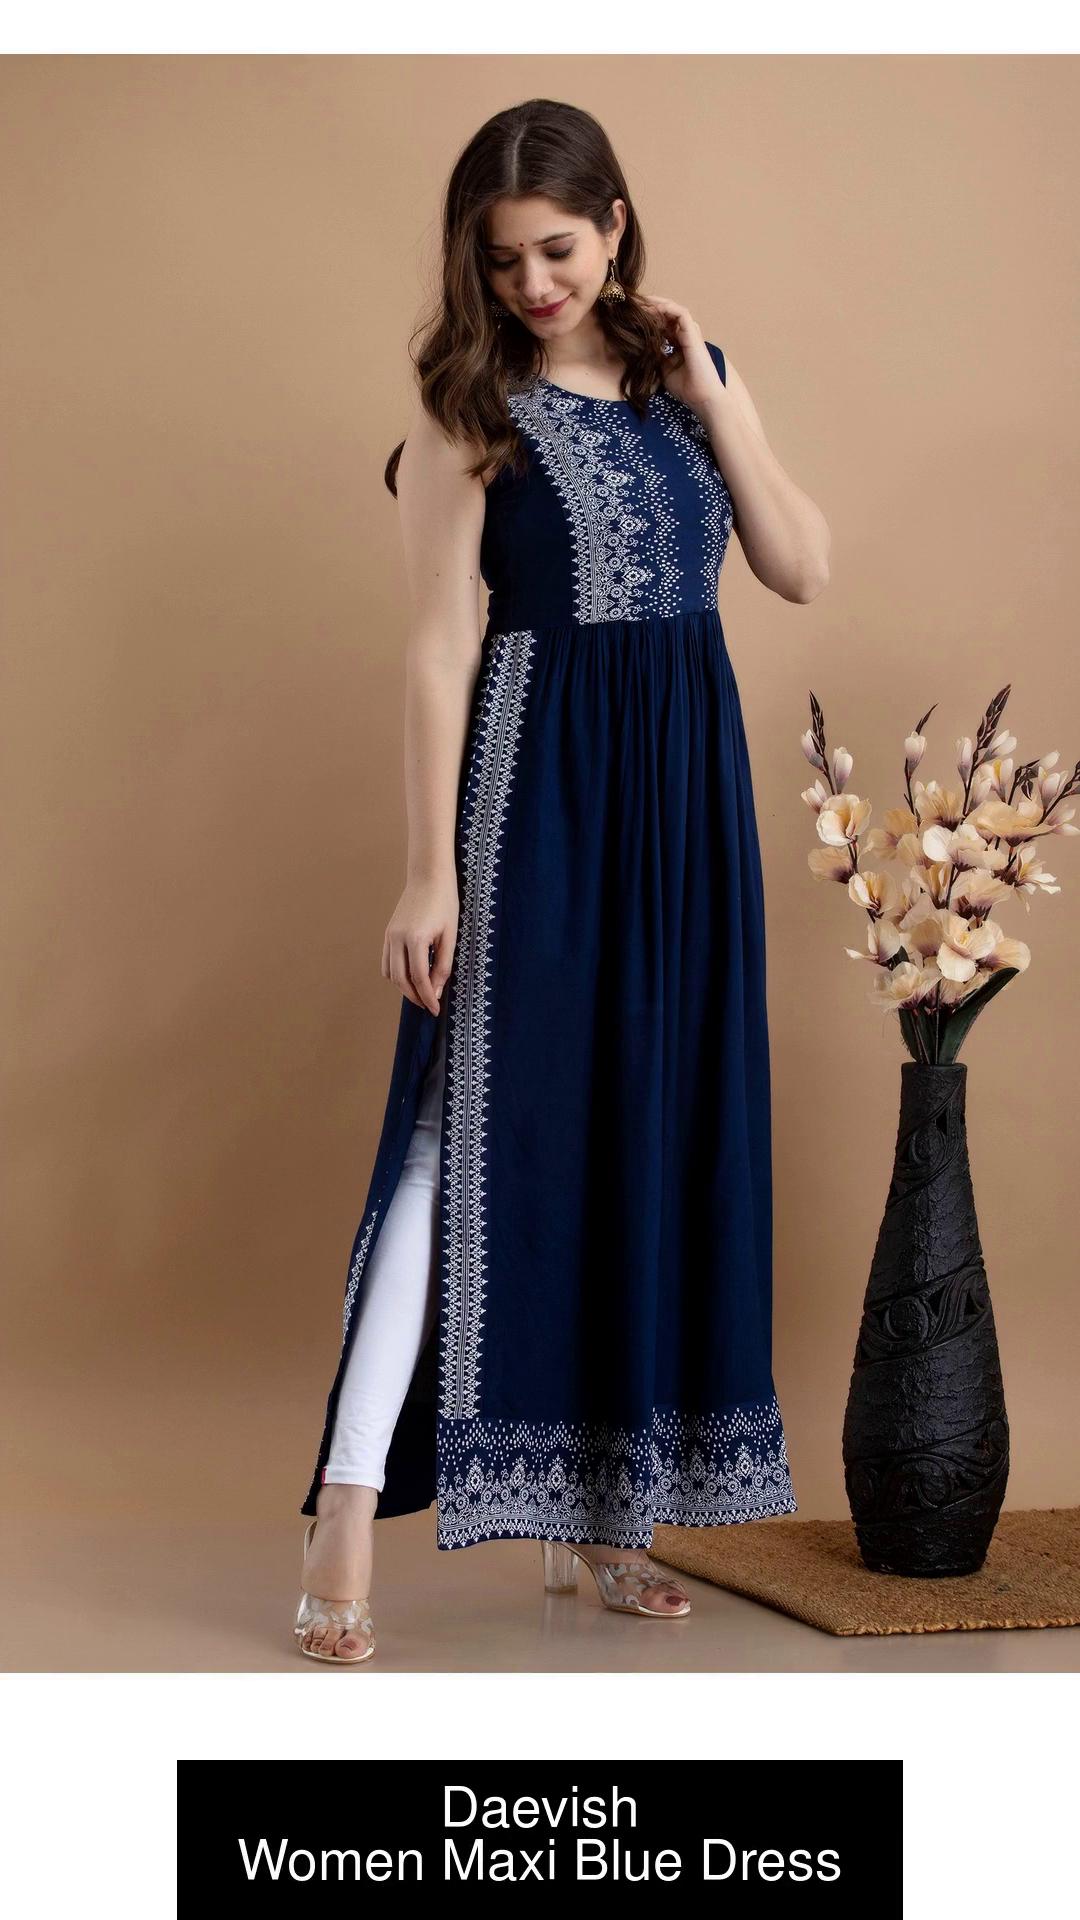 Daevish Women Maxi Blue Dress - Buy Daevish Women Maxi Blue Dress